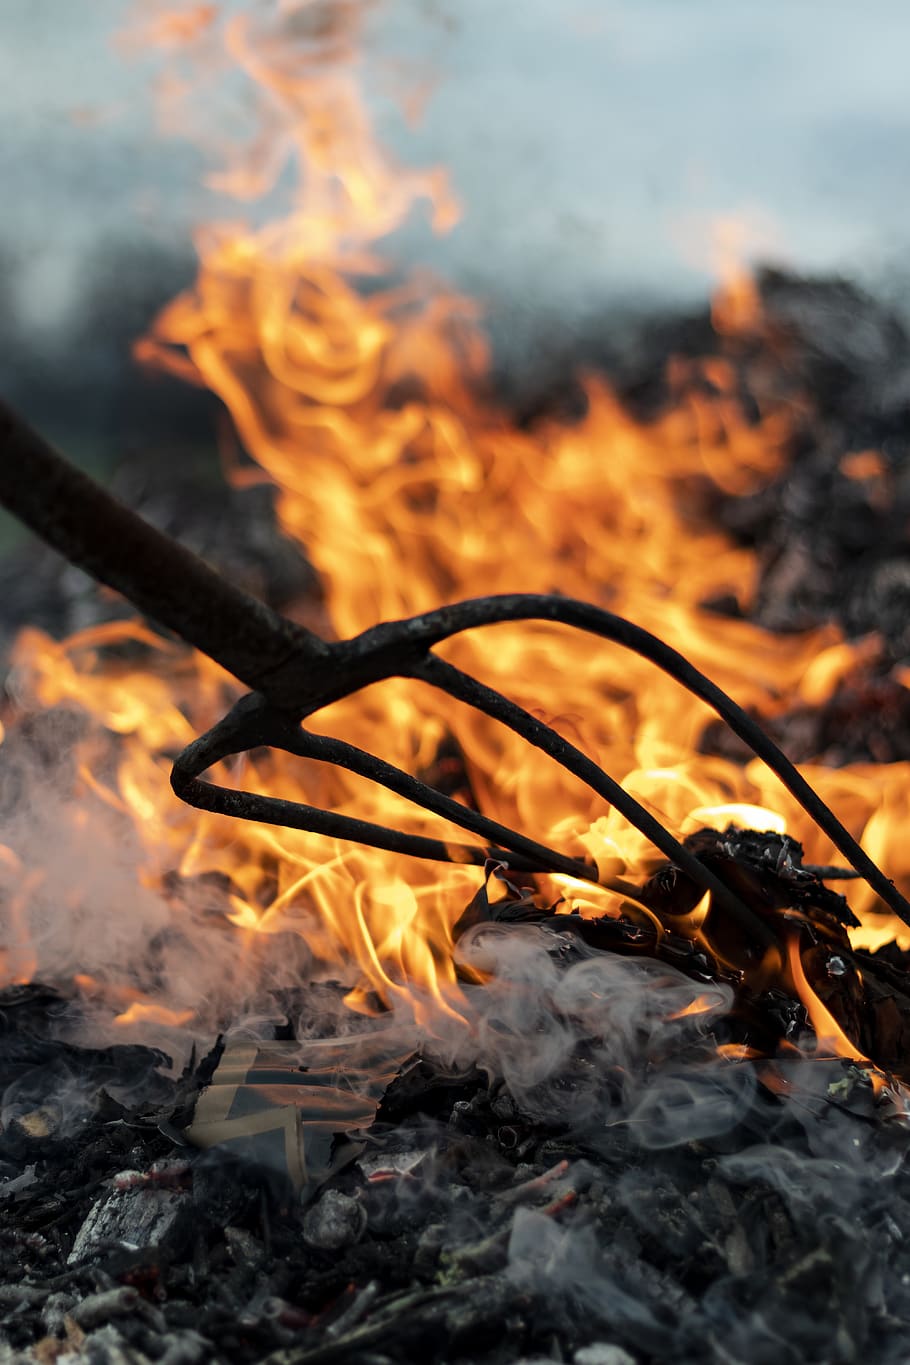 HD wallpaper: garden fork near burning wood during daytime, fire, fire -  natural phenomenon | Wallpaper Flare